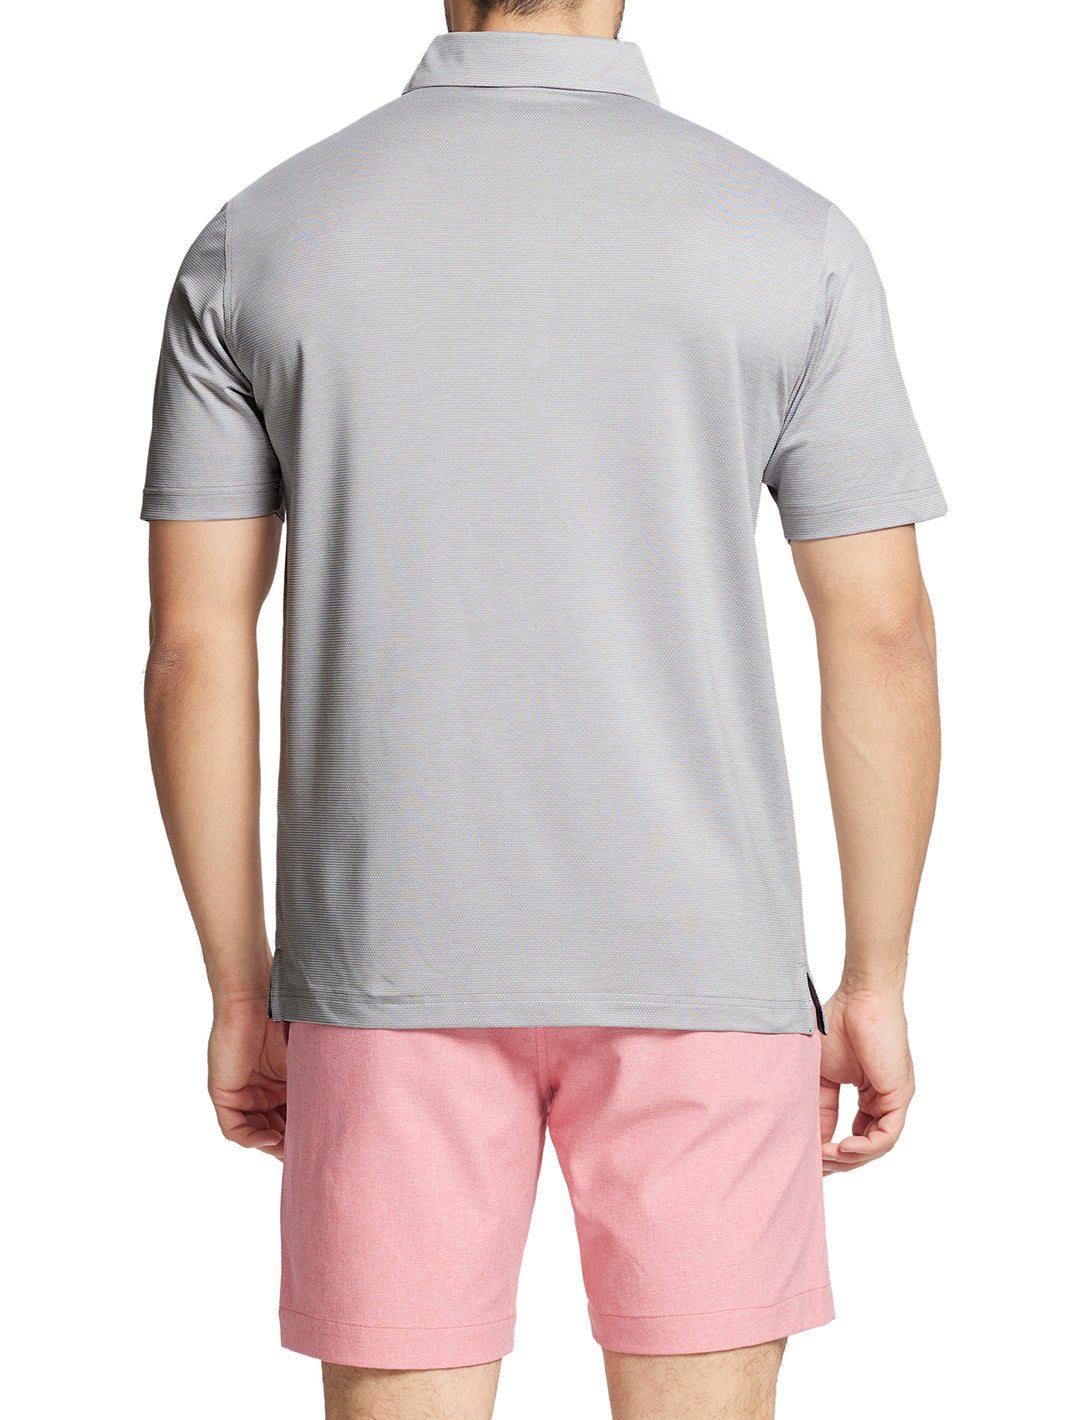 Men's Dry Fit Jacquard Golf Shirts-Faded Denim Heather